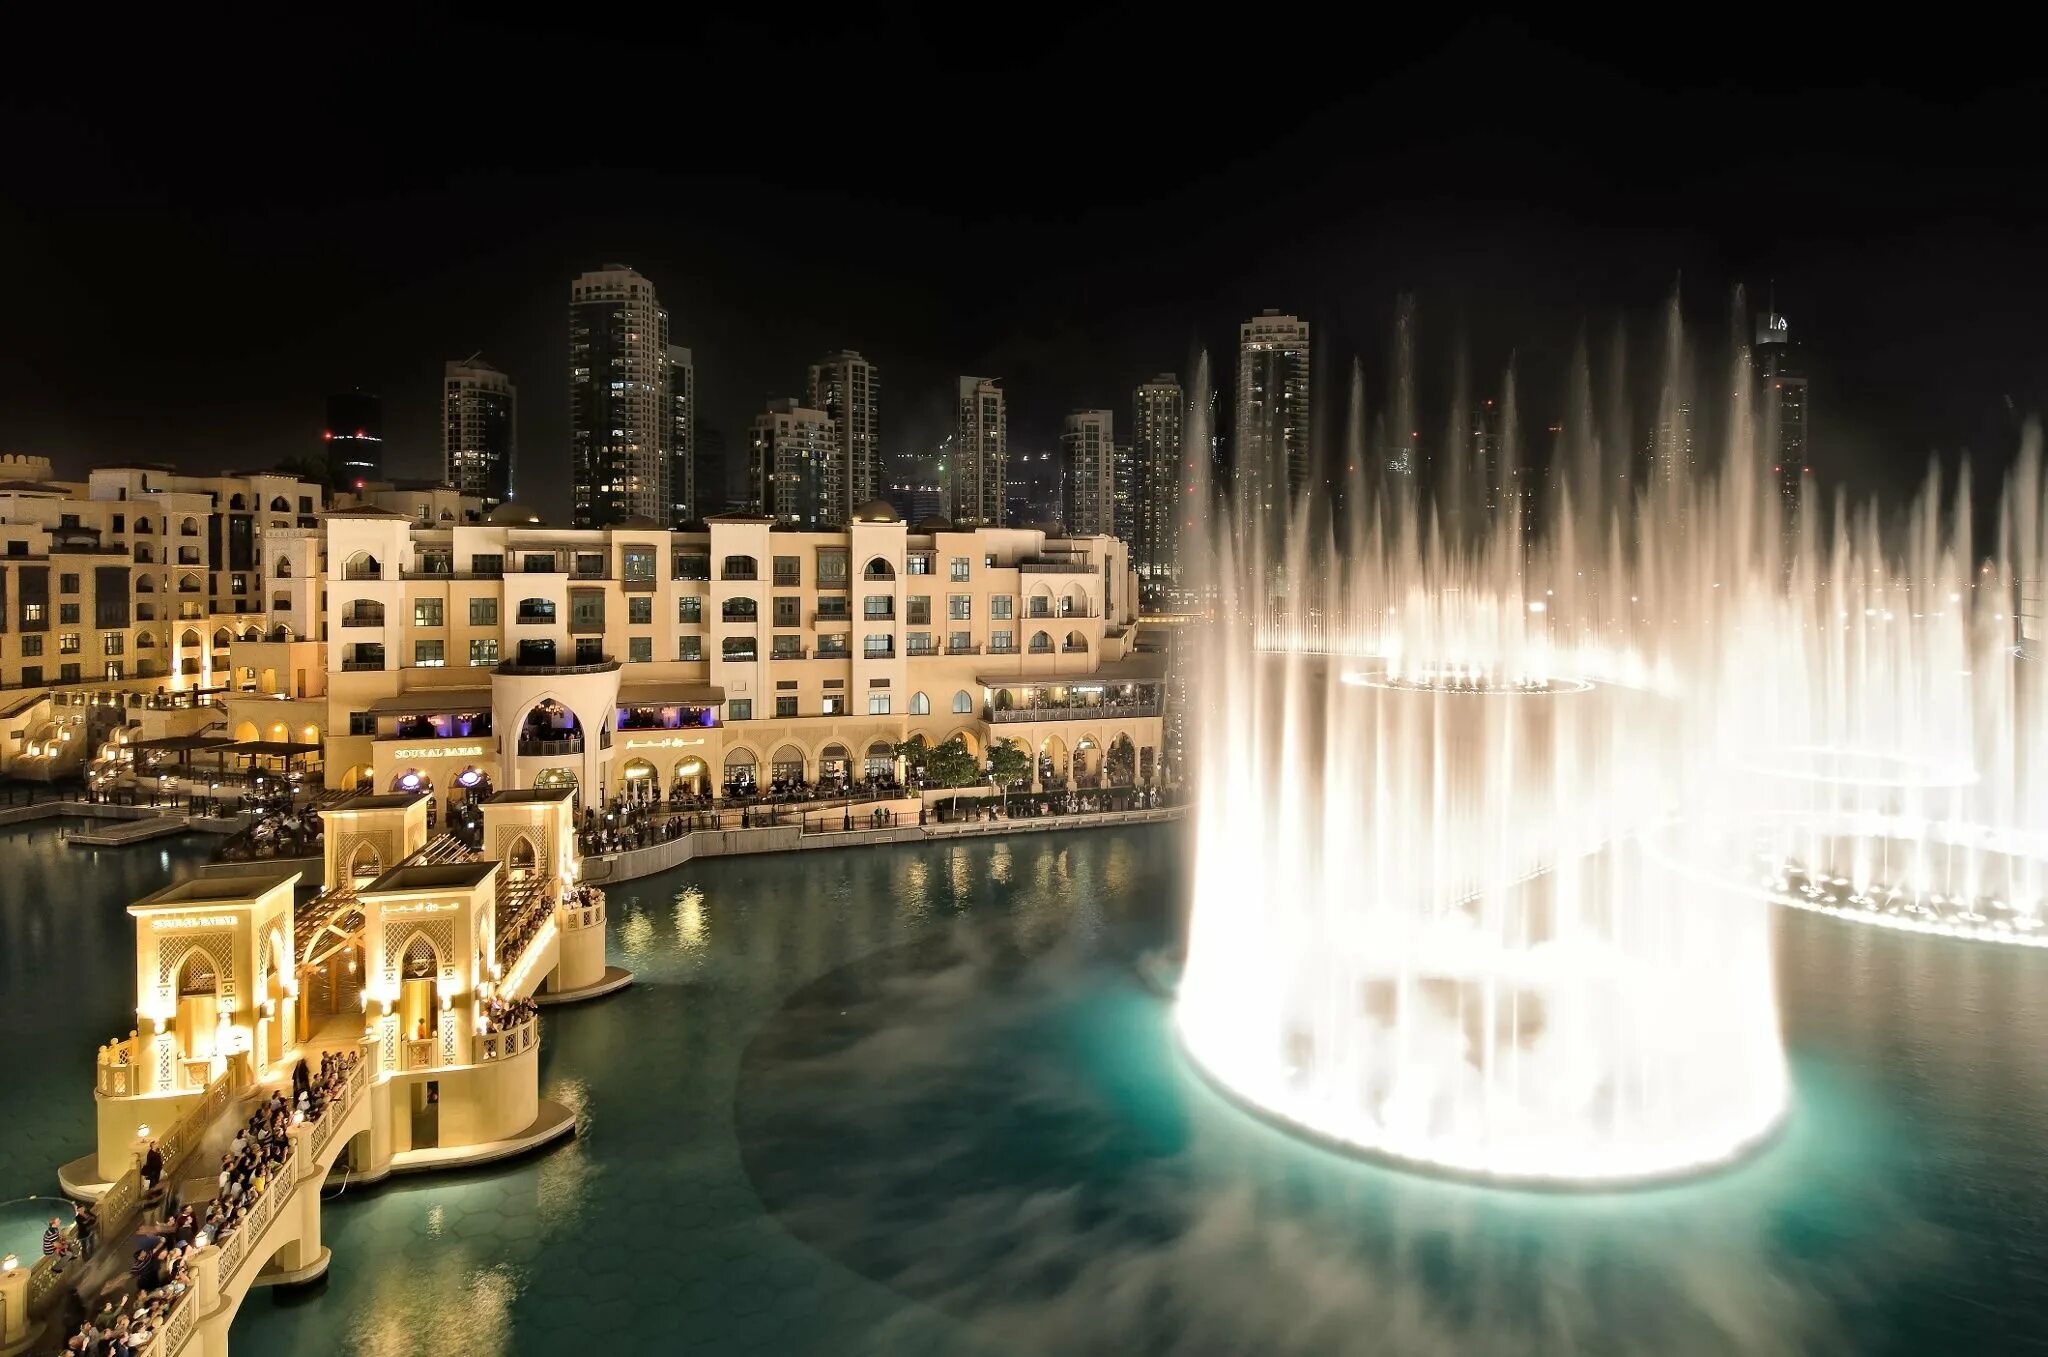 Дубайские видео. Бурдж Халифа фонтаны. Поющие фонтаны Бурдж Халифа. Поющие фонтаны в Дубае (фонтан Дубай). Фонтан Дубай (Танцующий фонтан) / Dubai Fountain.